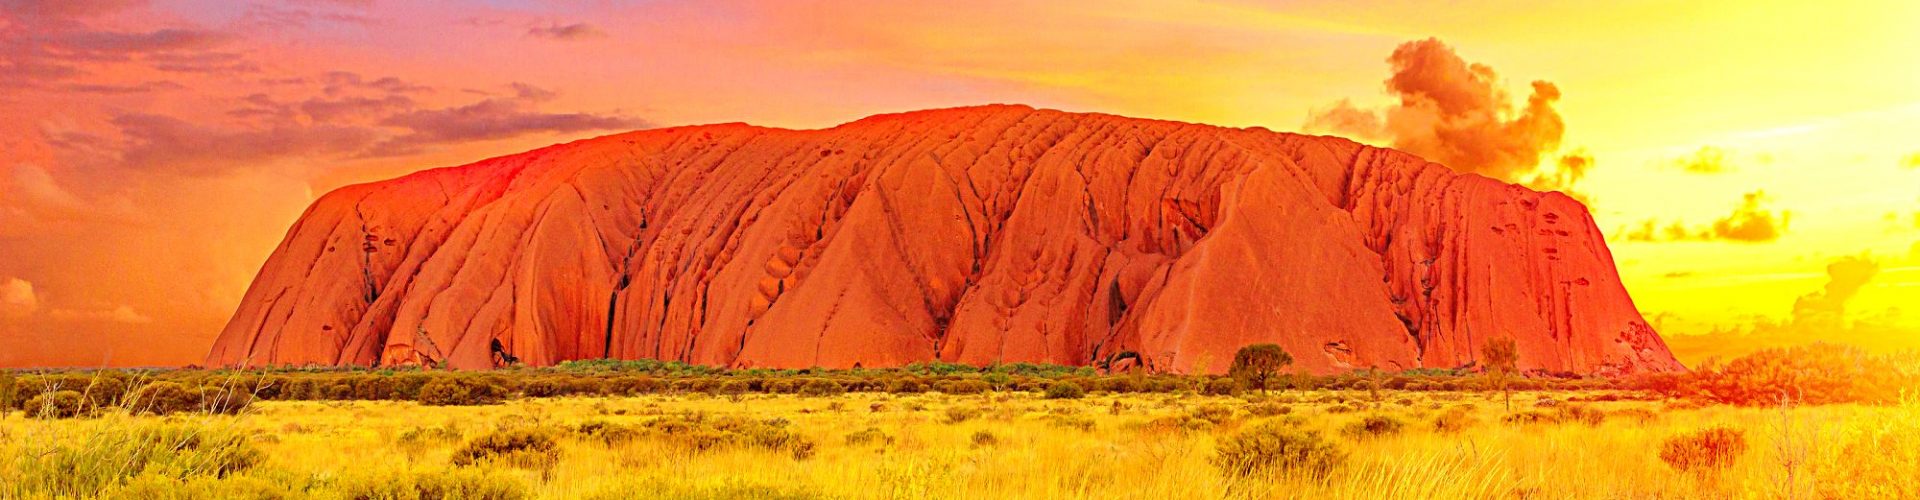 10 Top Australian Outback Campervan Destinations inner banner